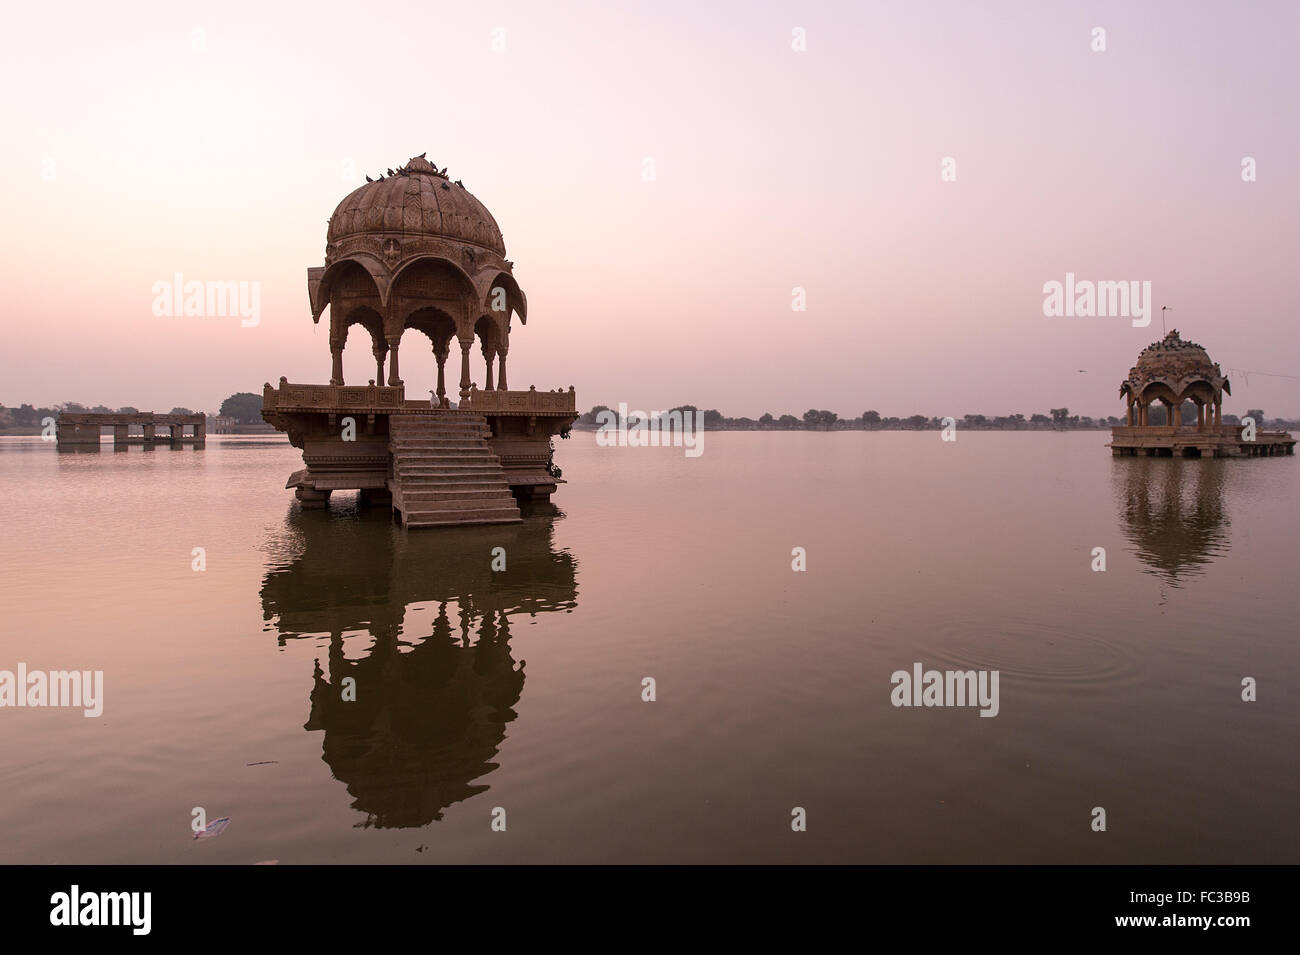 Indian landmarks - Gadi Sagar temple on Gadisar lake during sunrise - Jaisalmer, Rajasthan, North India. Stock Photo